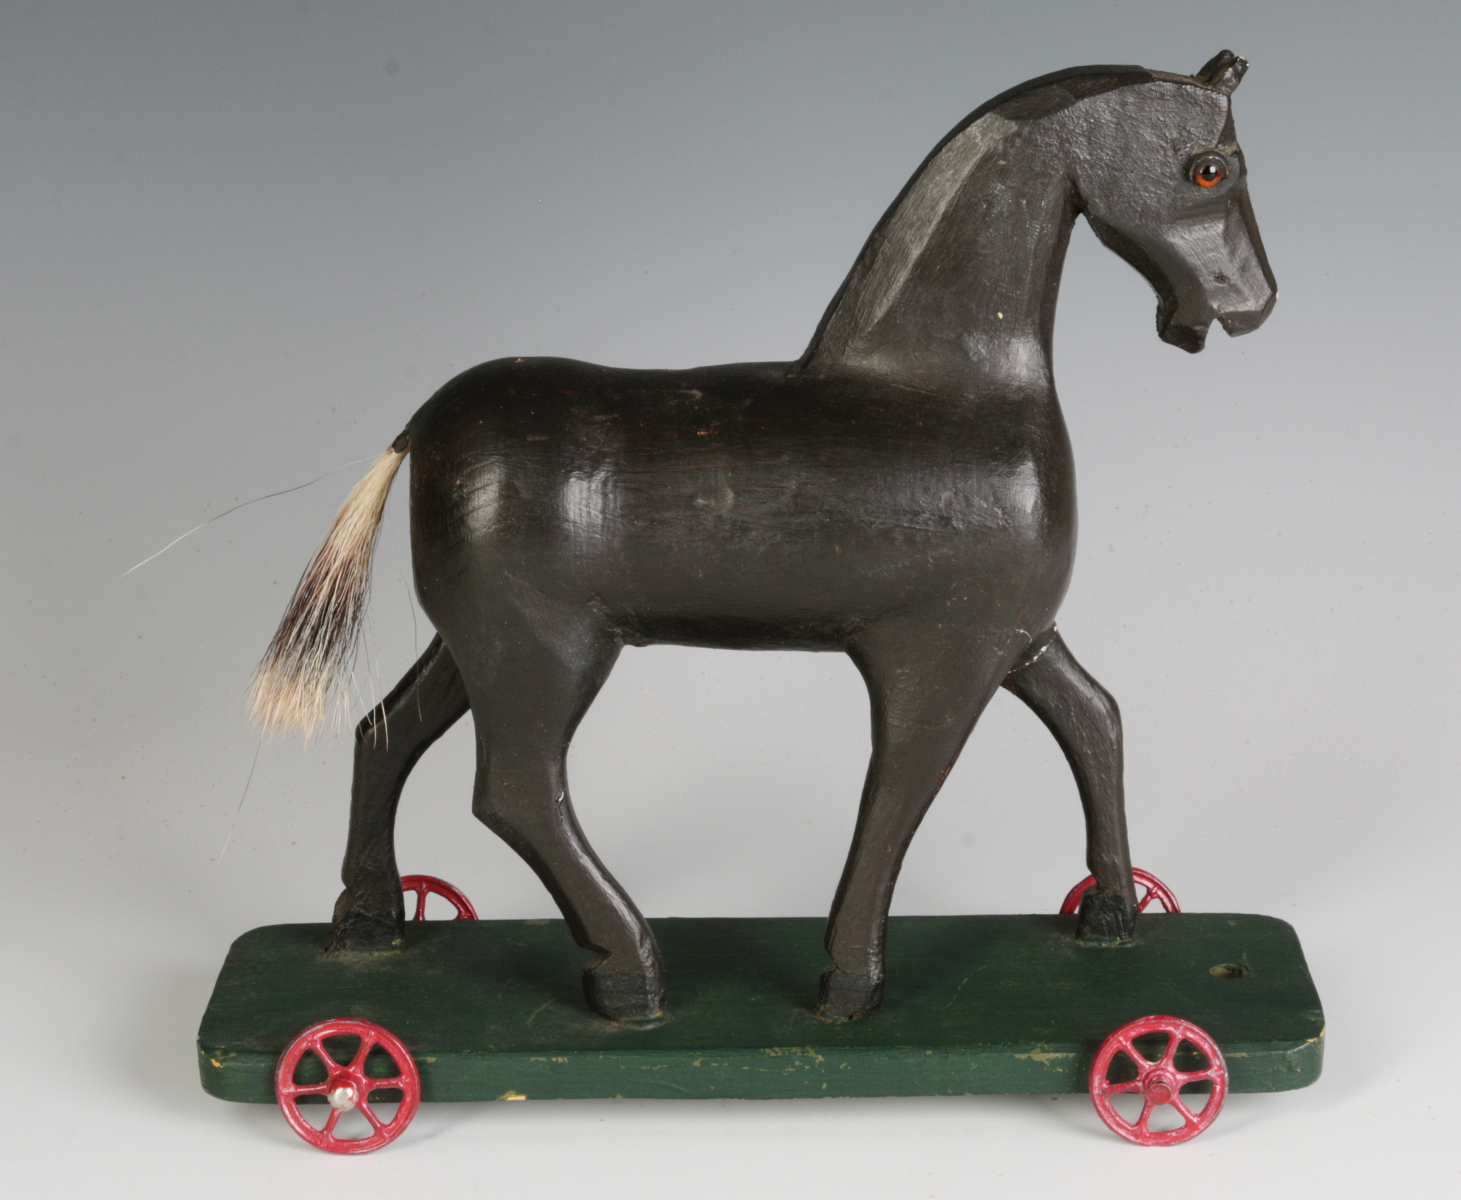 A CIRCA 1900 FOLK ART CARVED WOOD PLATFORM HORSE